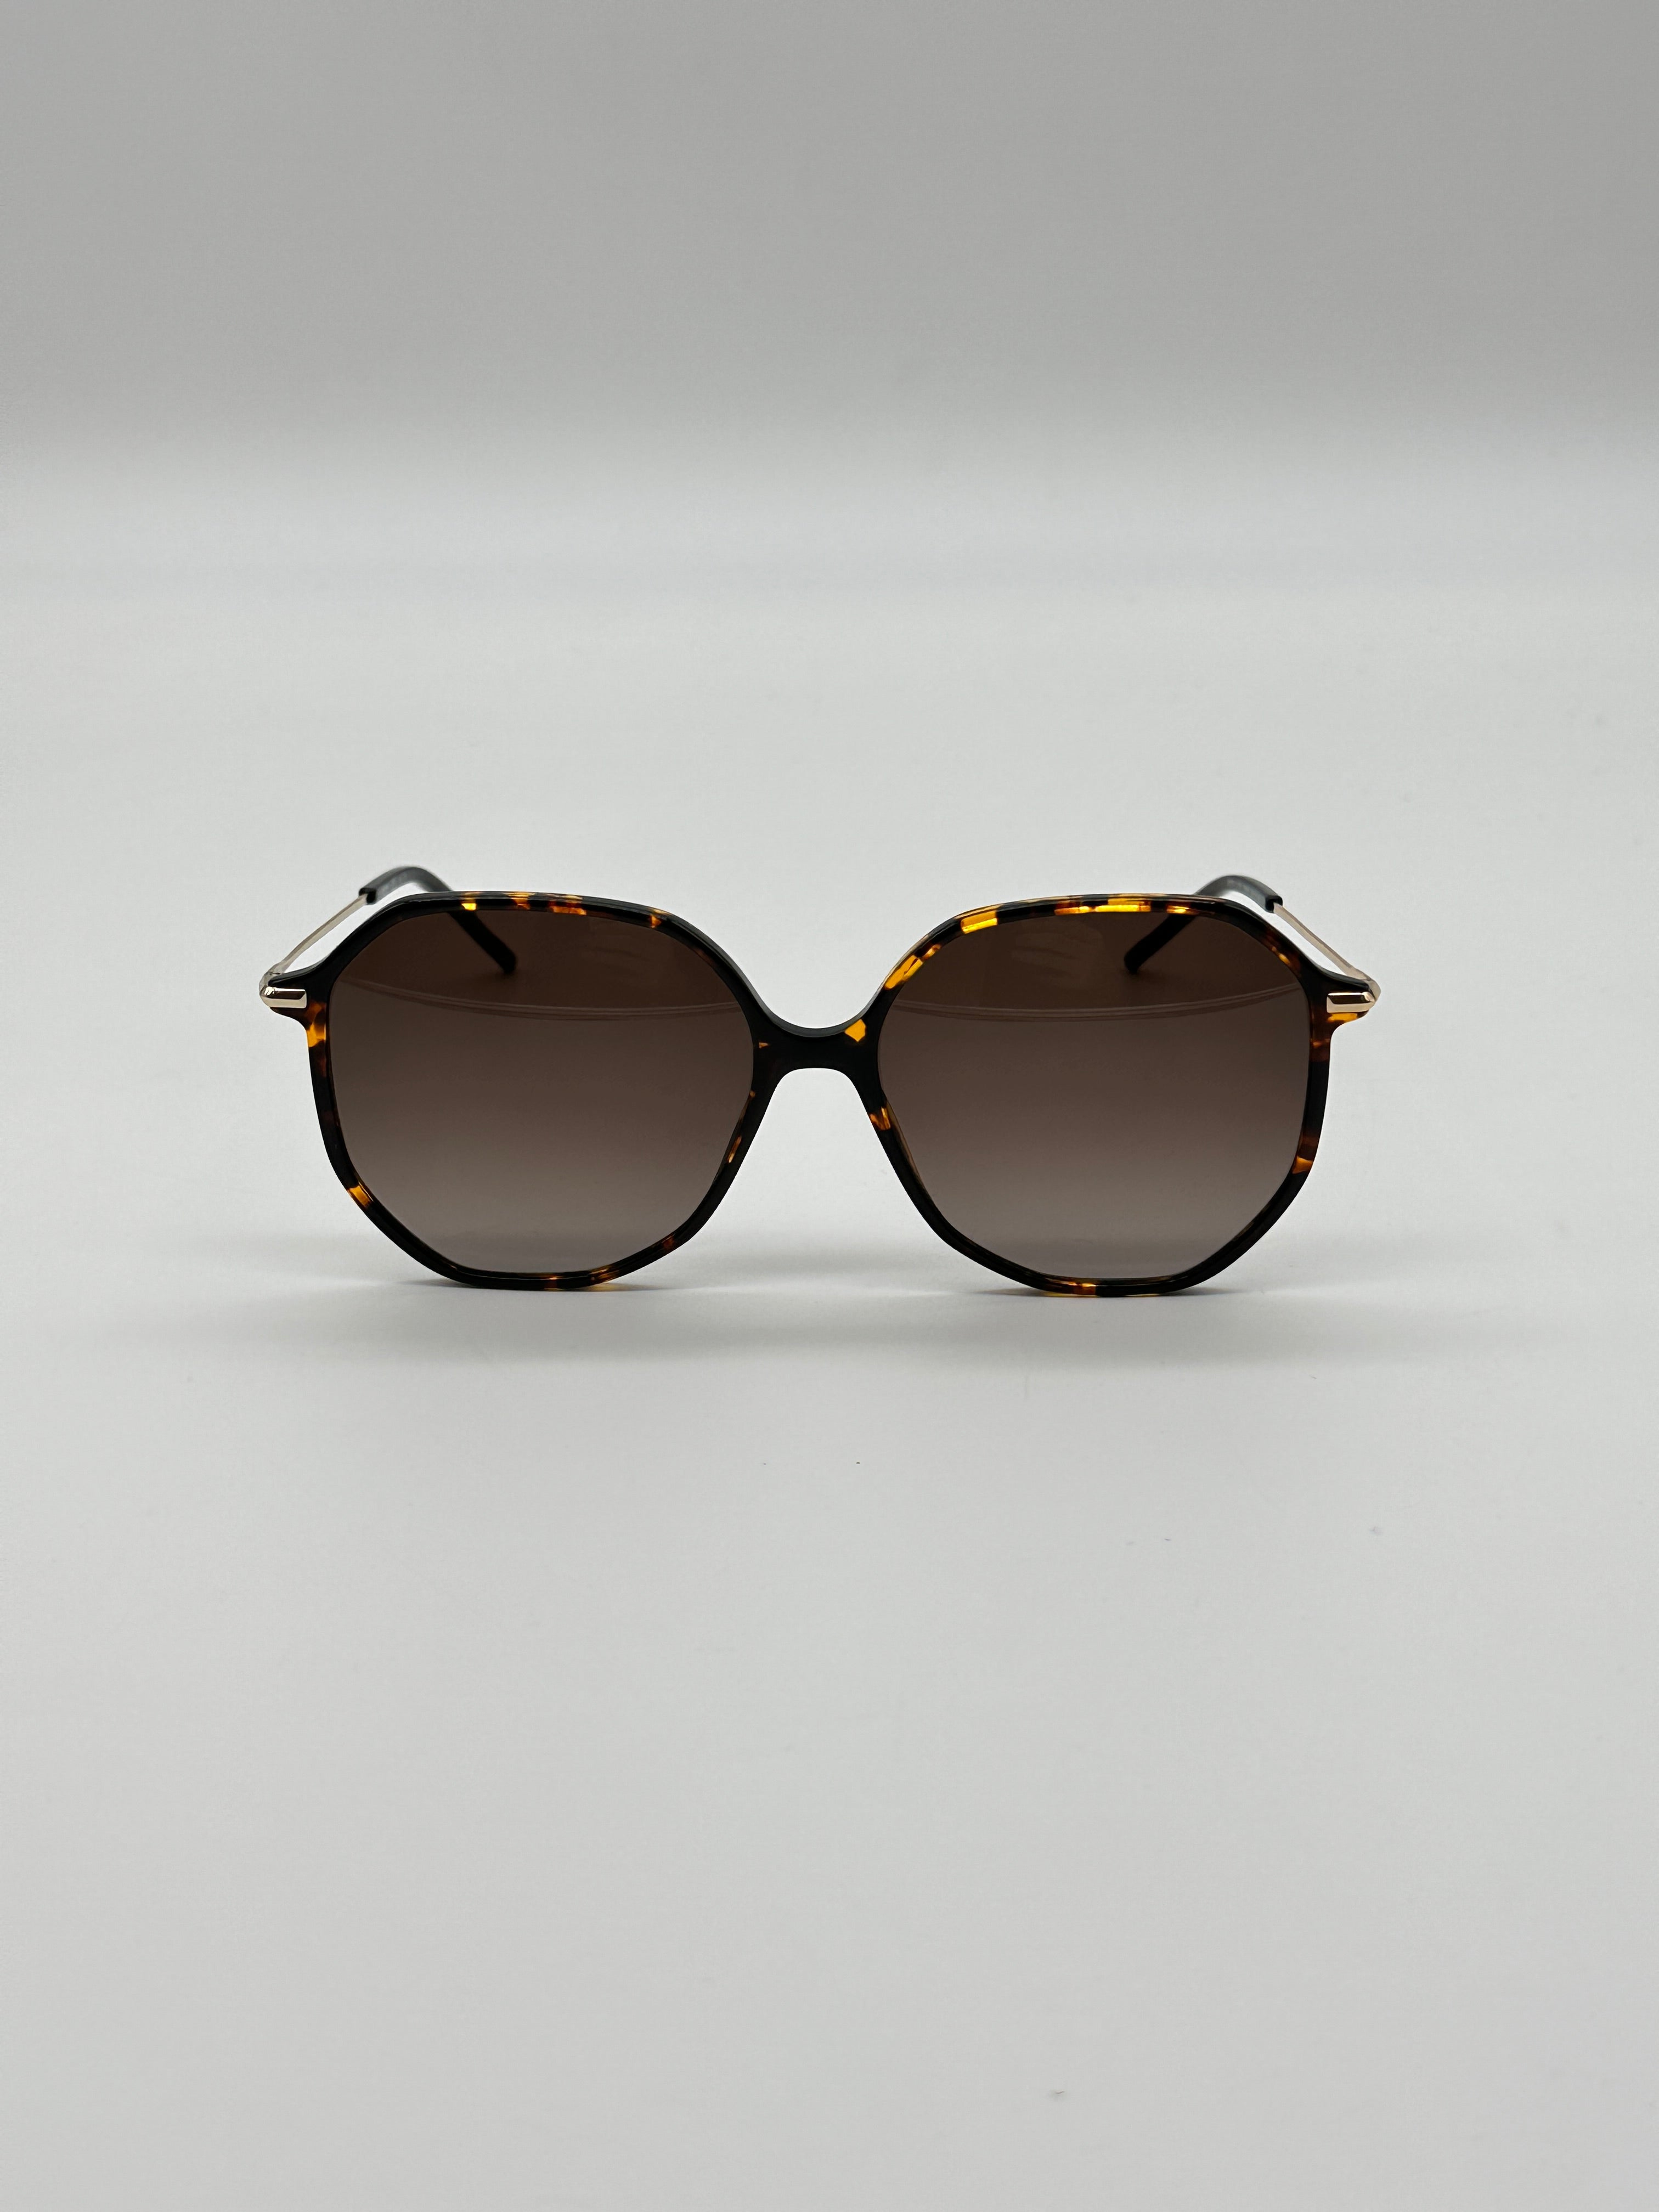 Vintage Speckled Sunglasses